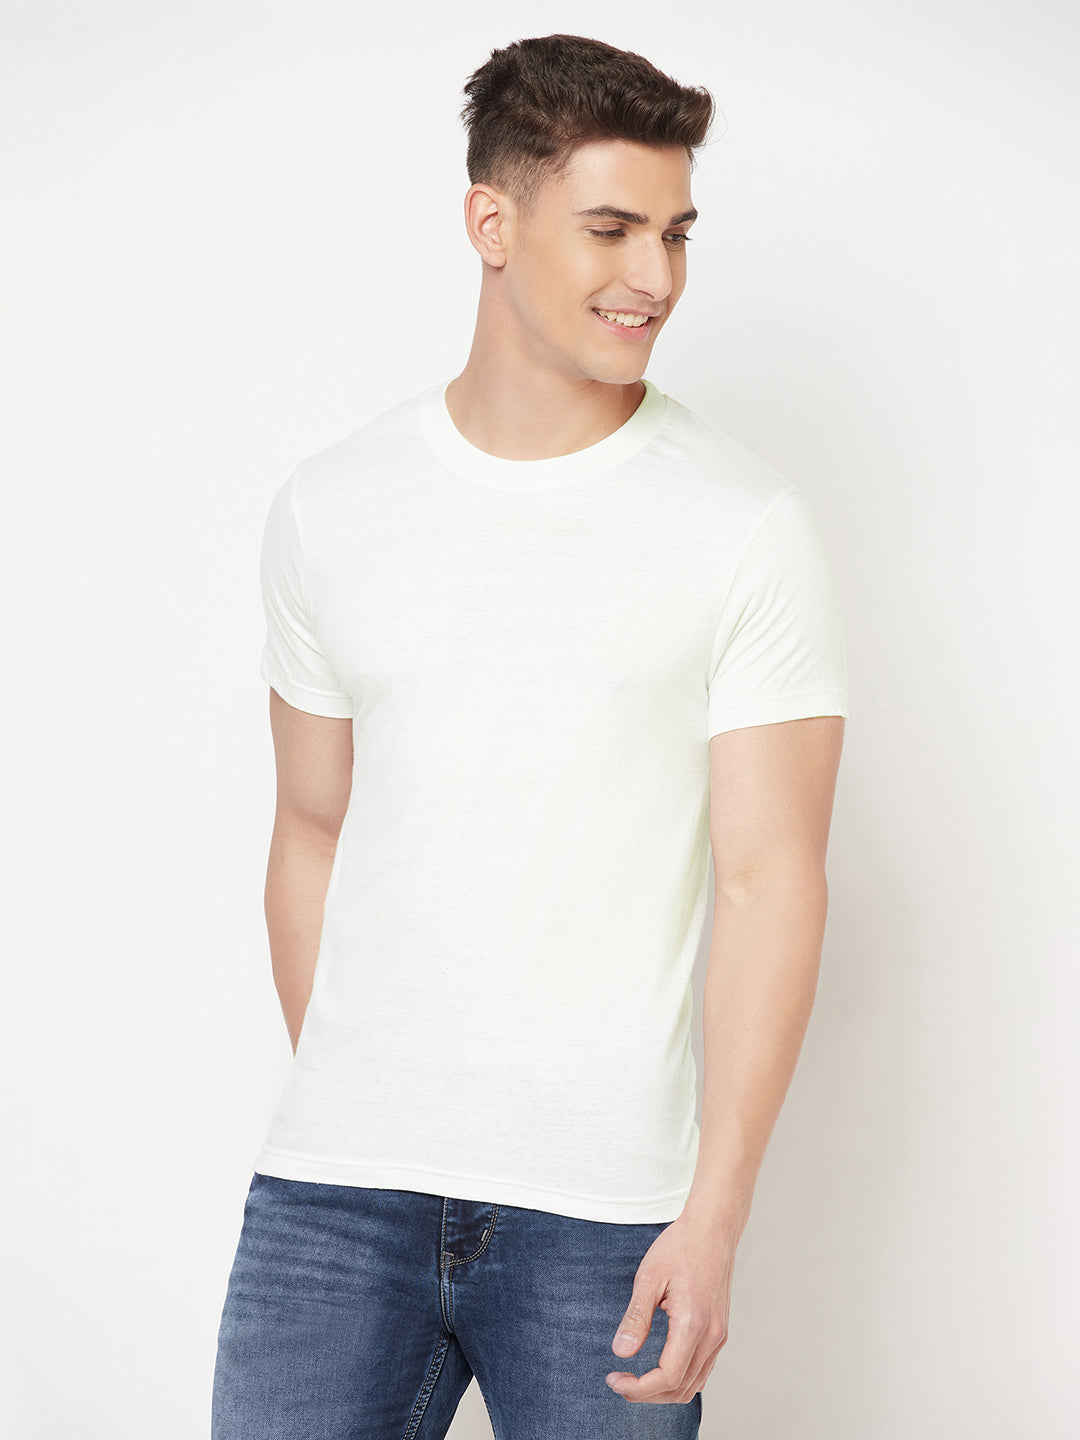 Premium Cotton Tshirts  (Pack of 2- Maroon,White)